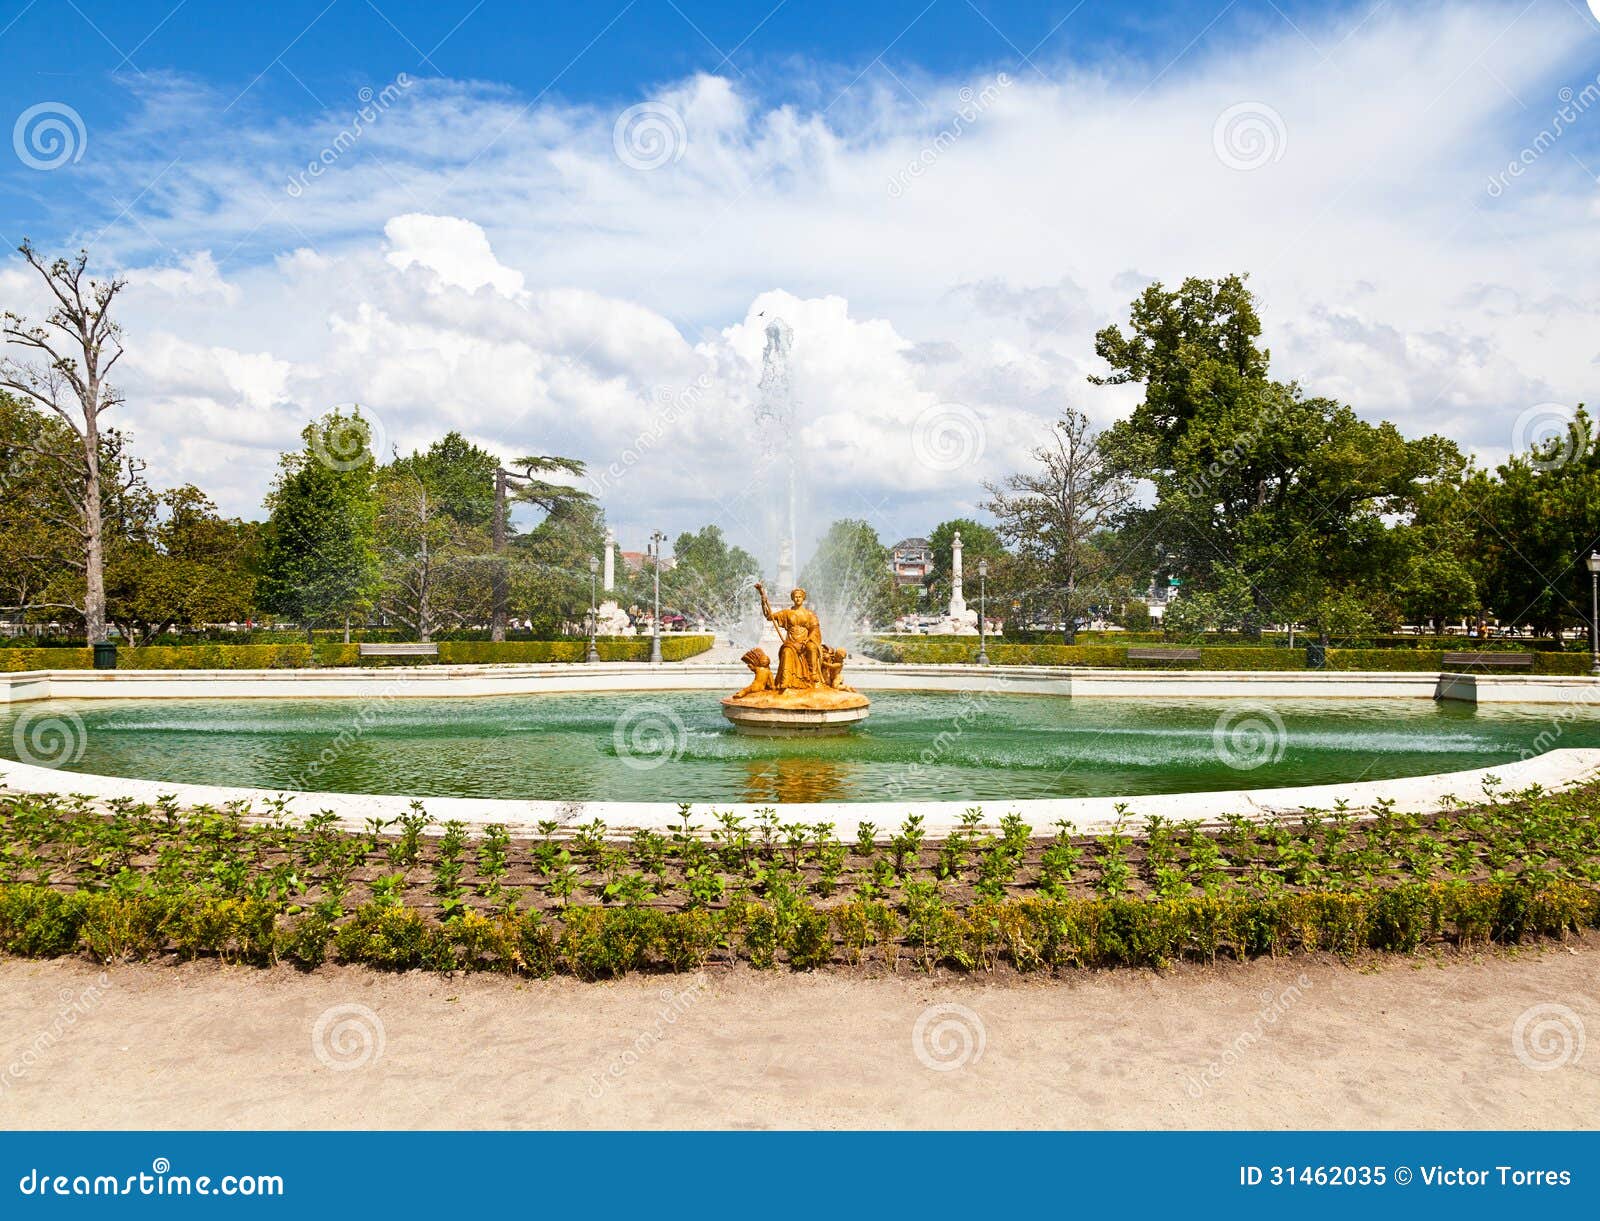 ceres fountain at parterre garden in aranjuez